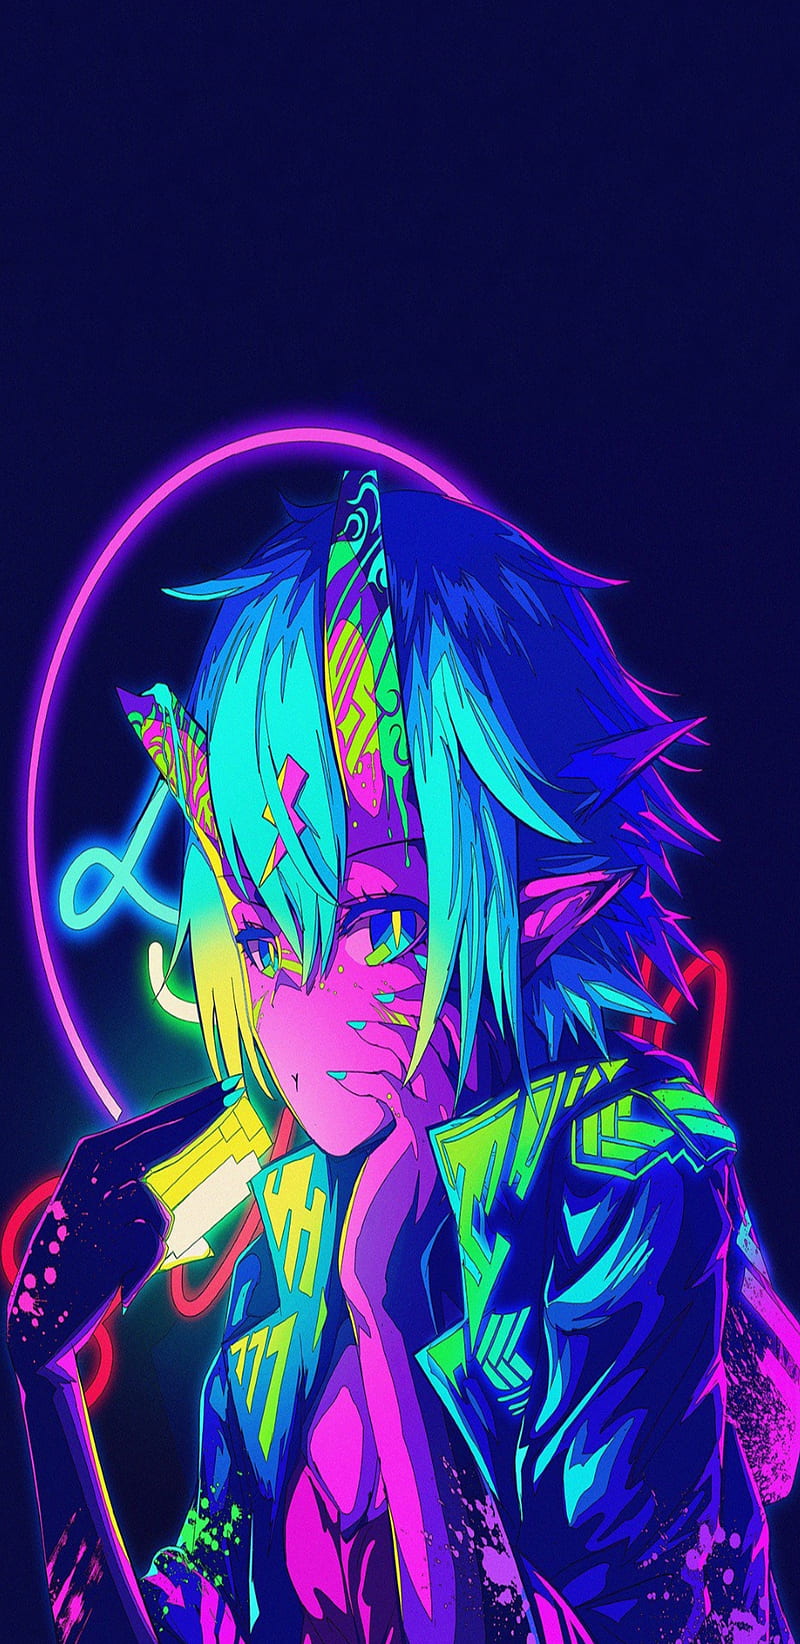 Neon Dark Anime with Horns Wallpaper by CorruptedRequired on DeviantArt